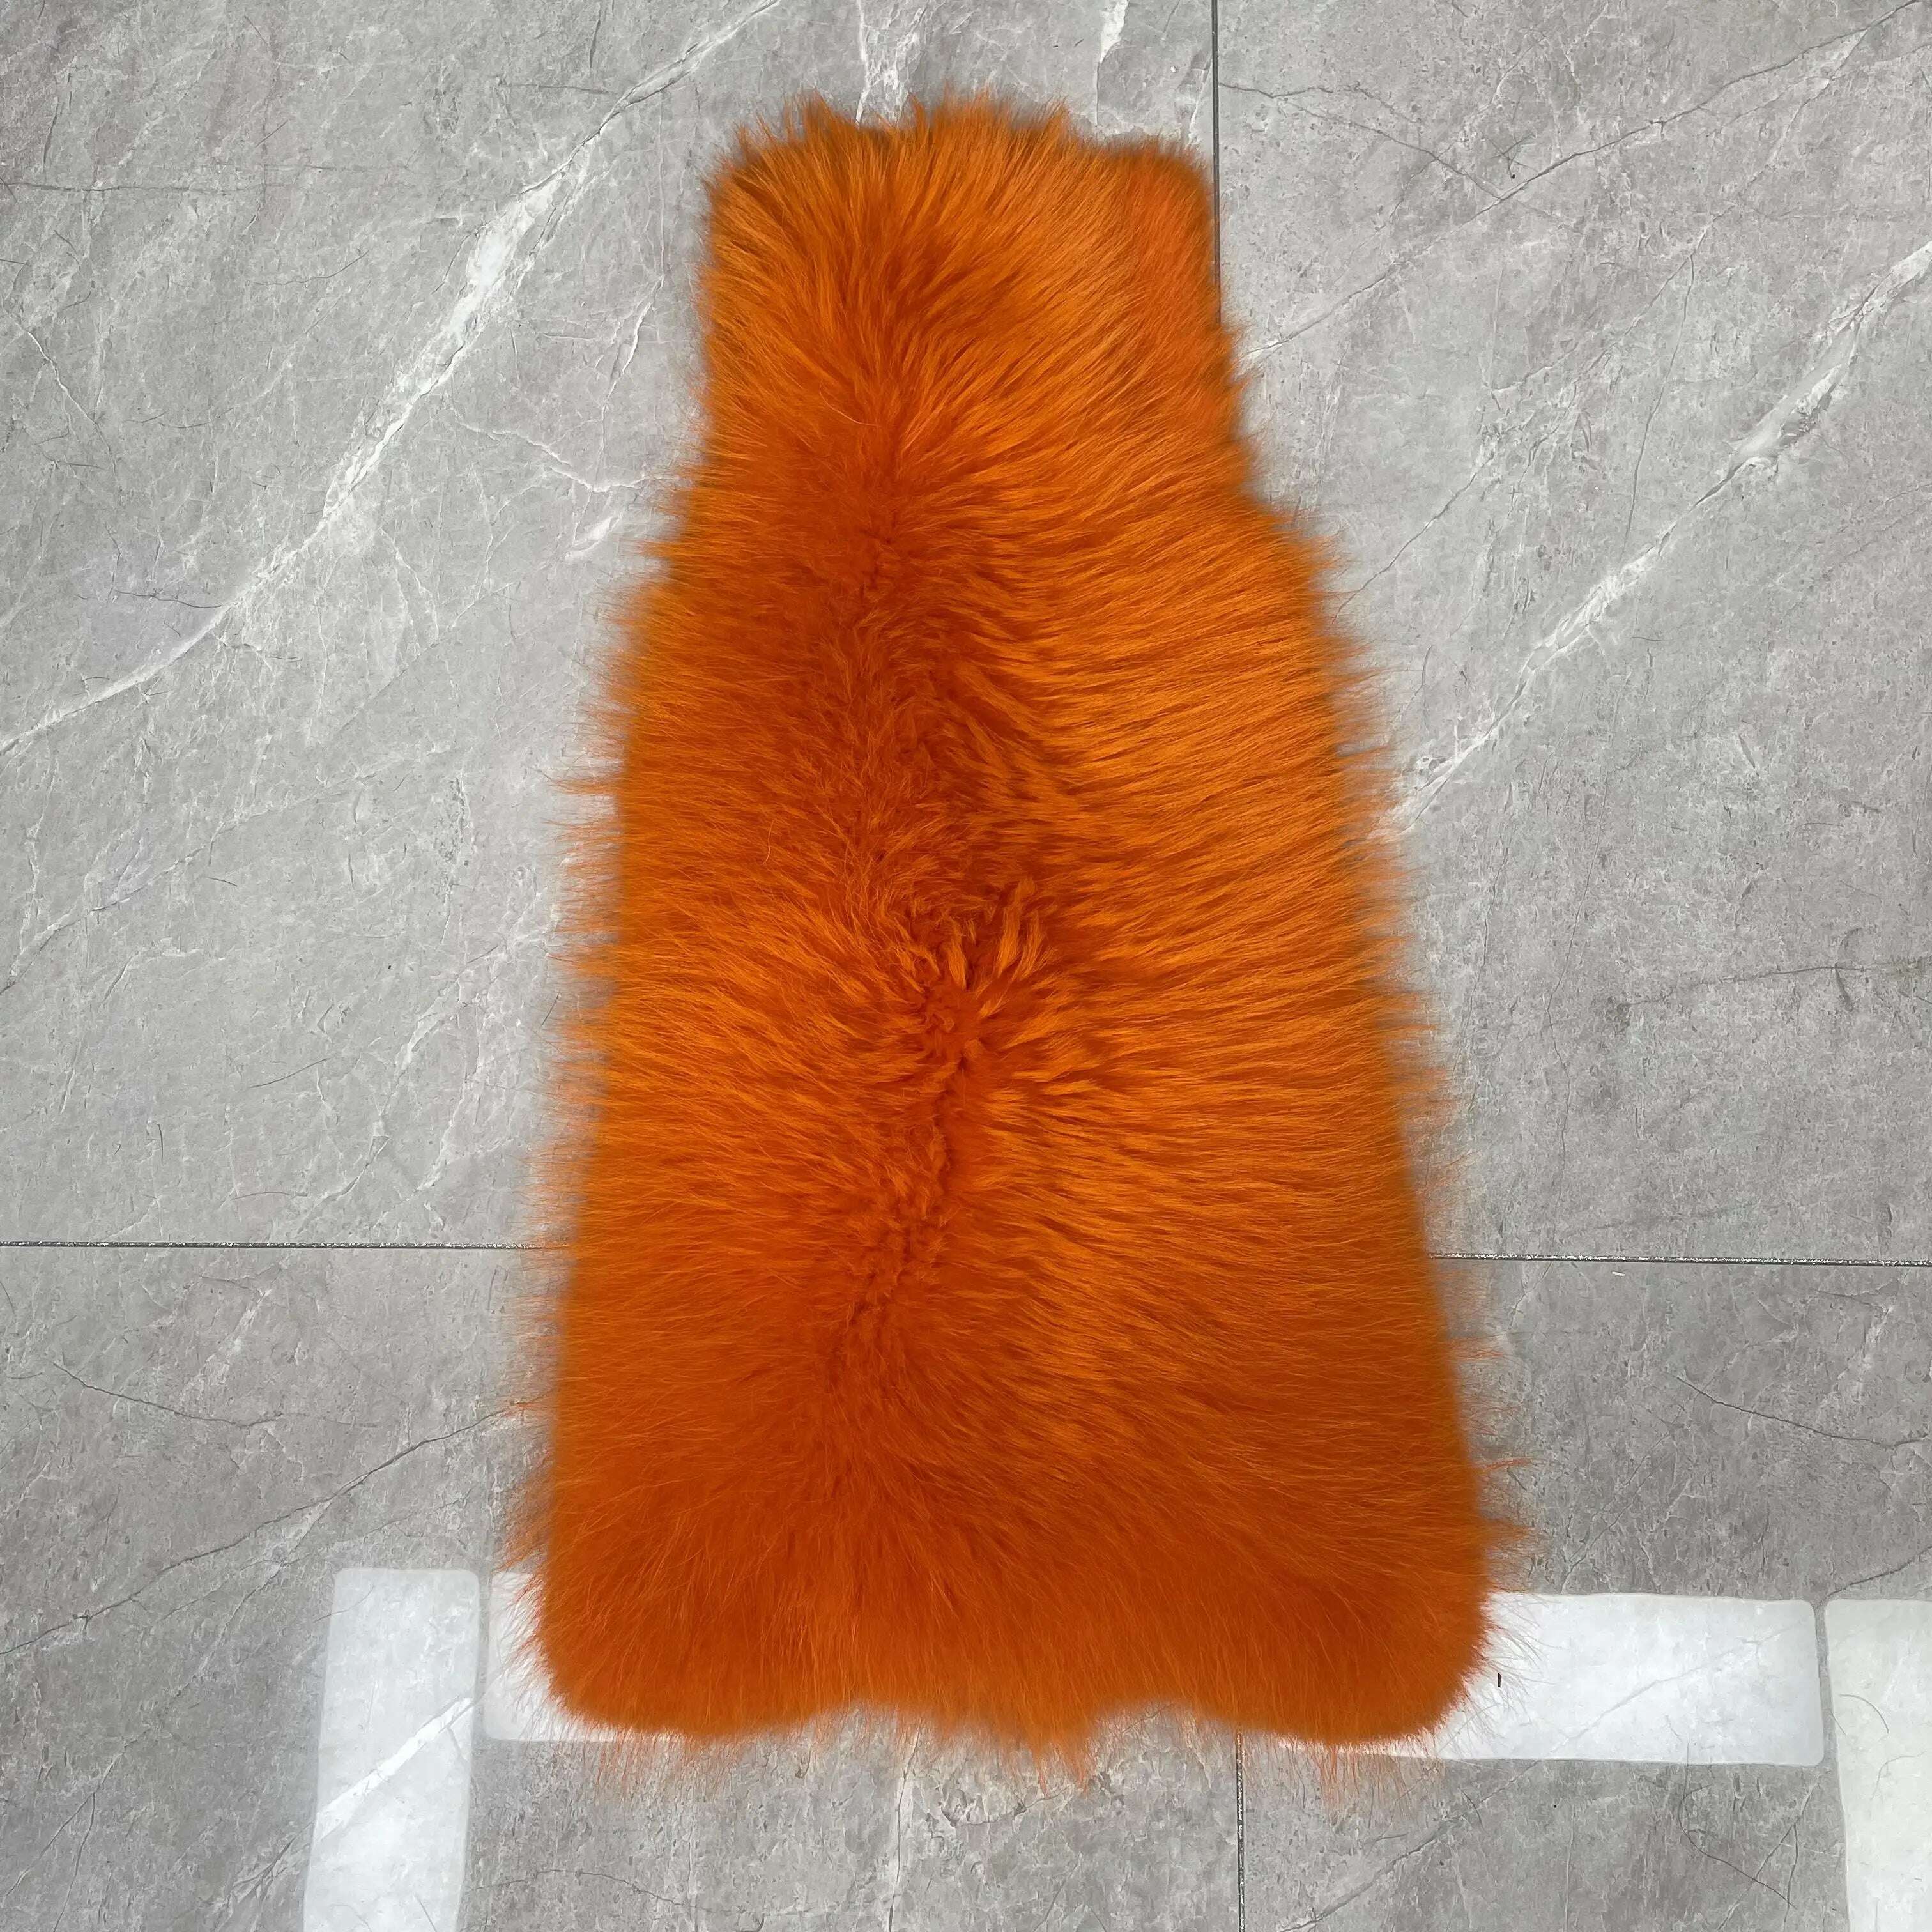 KIMLUD, Wholeskin Men Golden Fox Fur Long Coats Shawl Collar Winter Overcoats Genuine Natural Fox Furs Jacket, Orange / XS(88cm), KIMLUD Womens Clothes